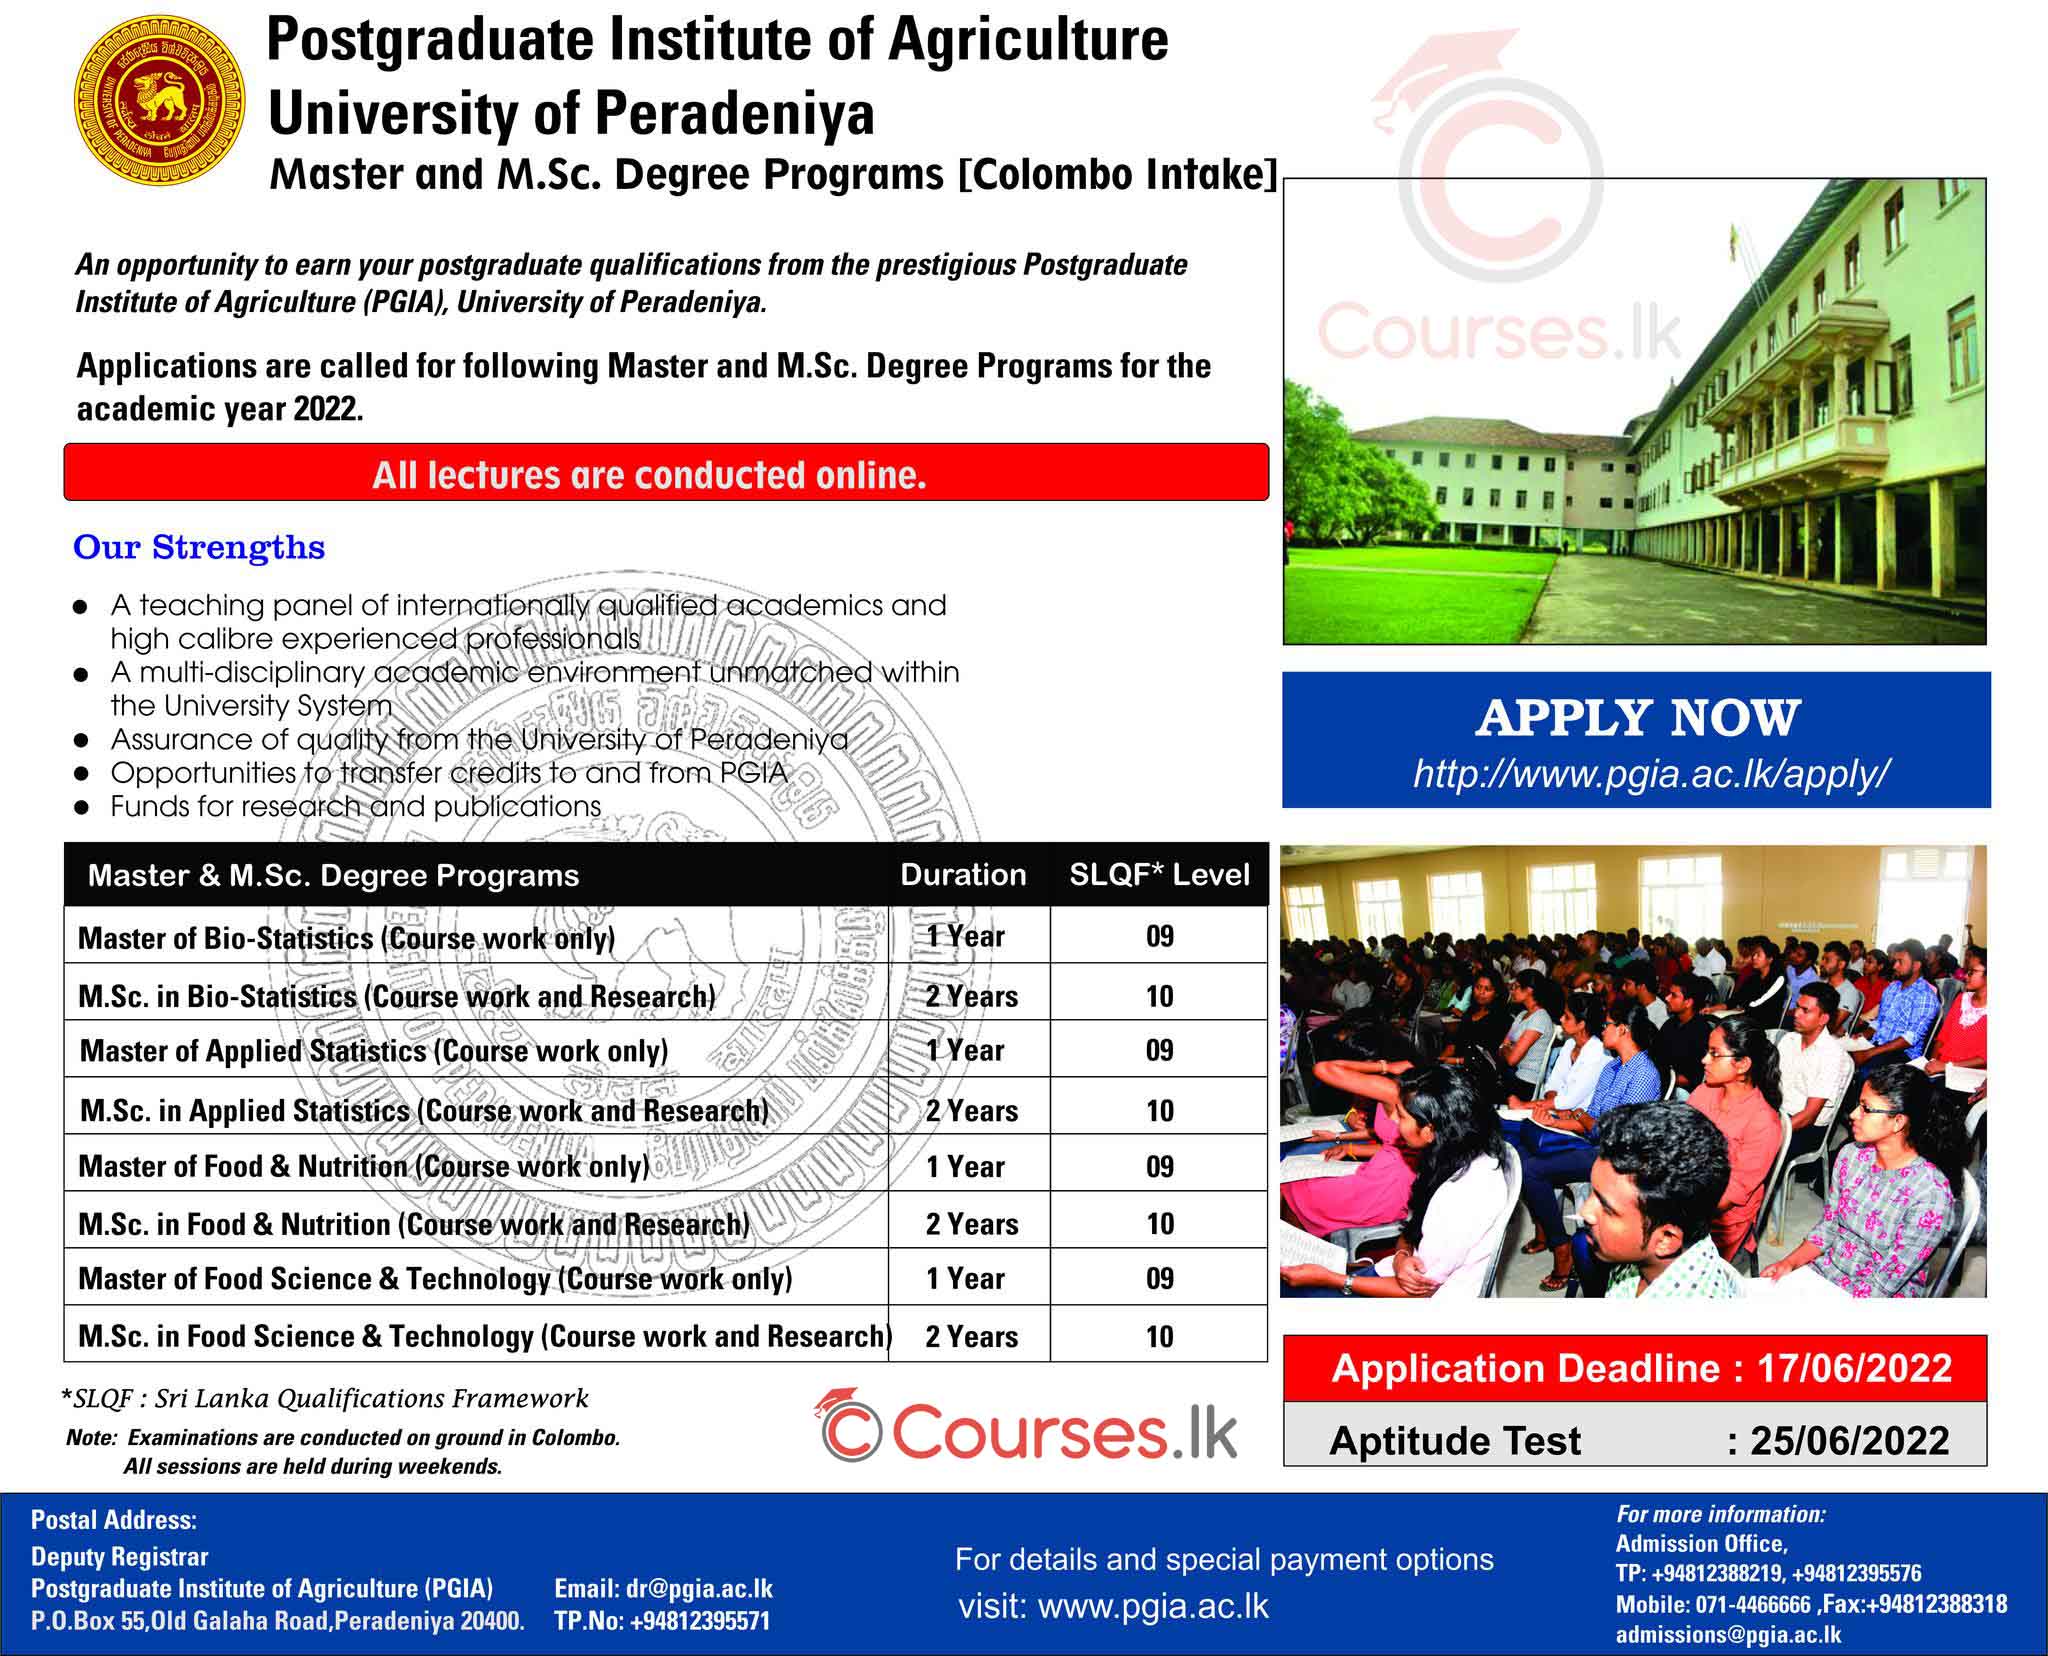 Master Degree Programmes (2022) Colombo Intake - PGIA, University of Peradeniya